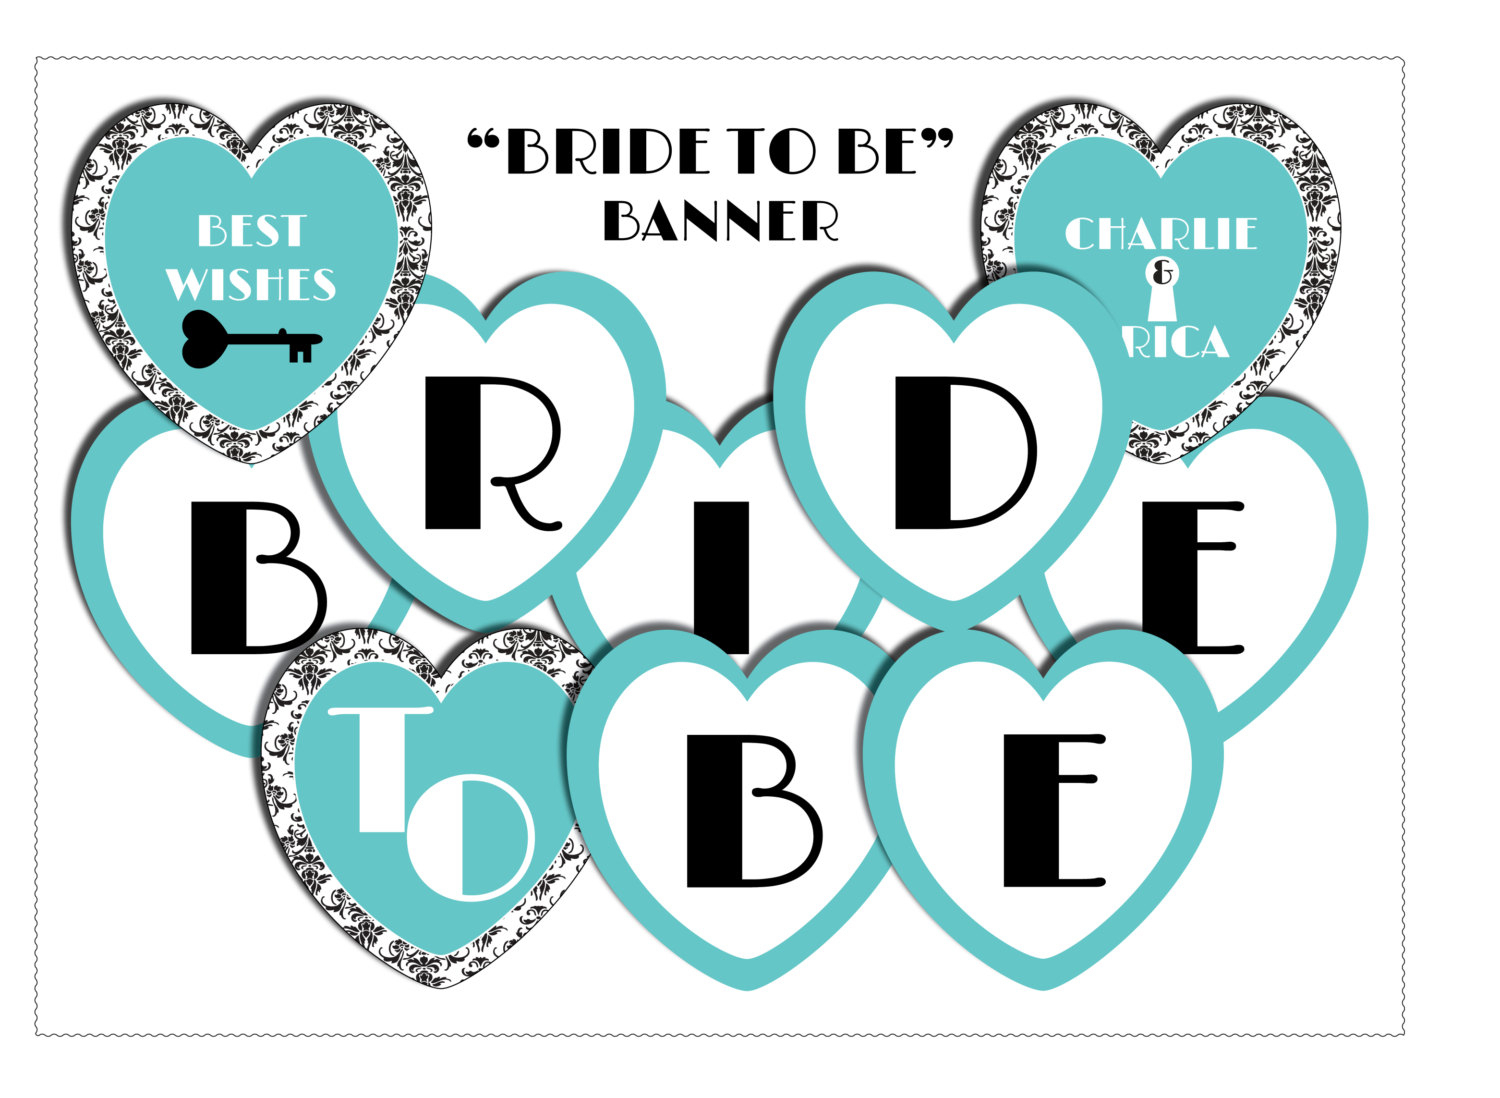 From Miss To Mrs Banner Template – Best Banner Design 2018 Regarding Bridal Shower Banner Template